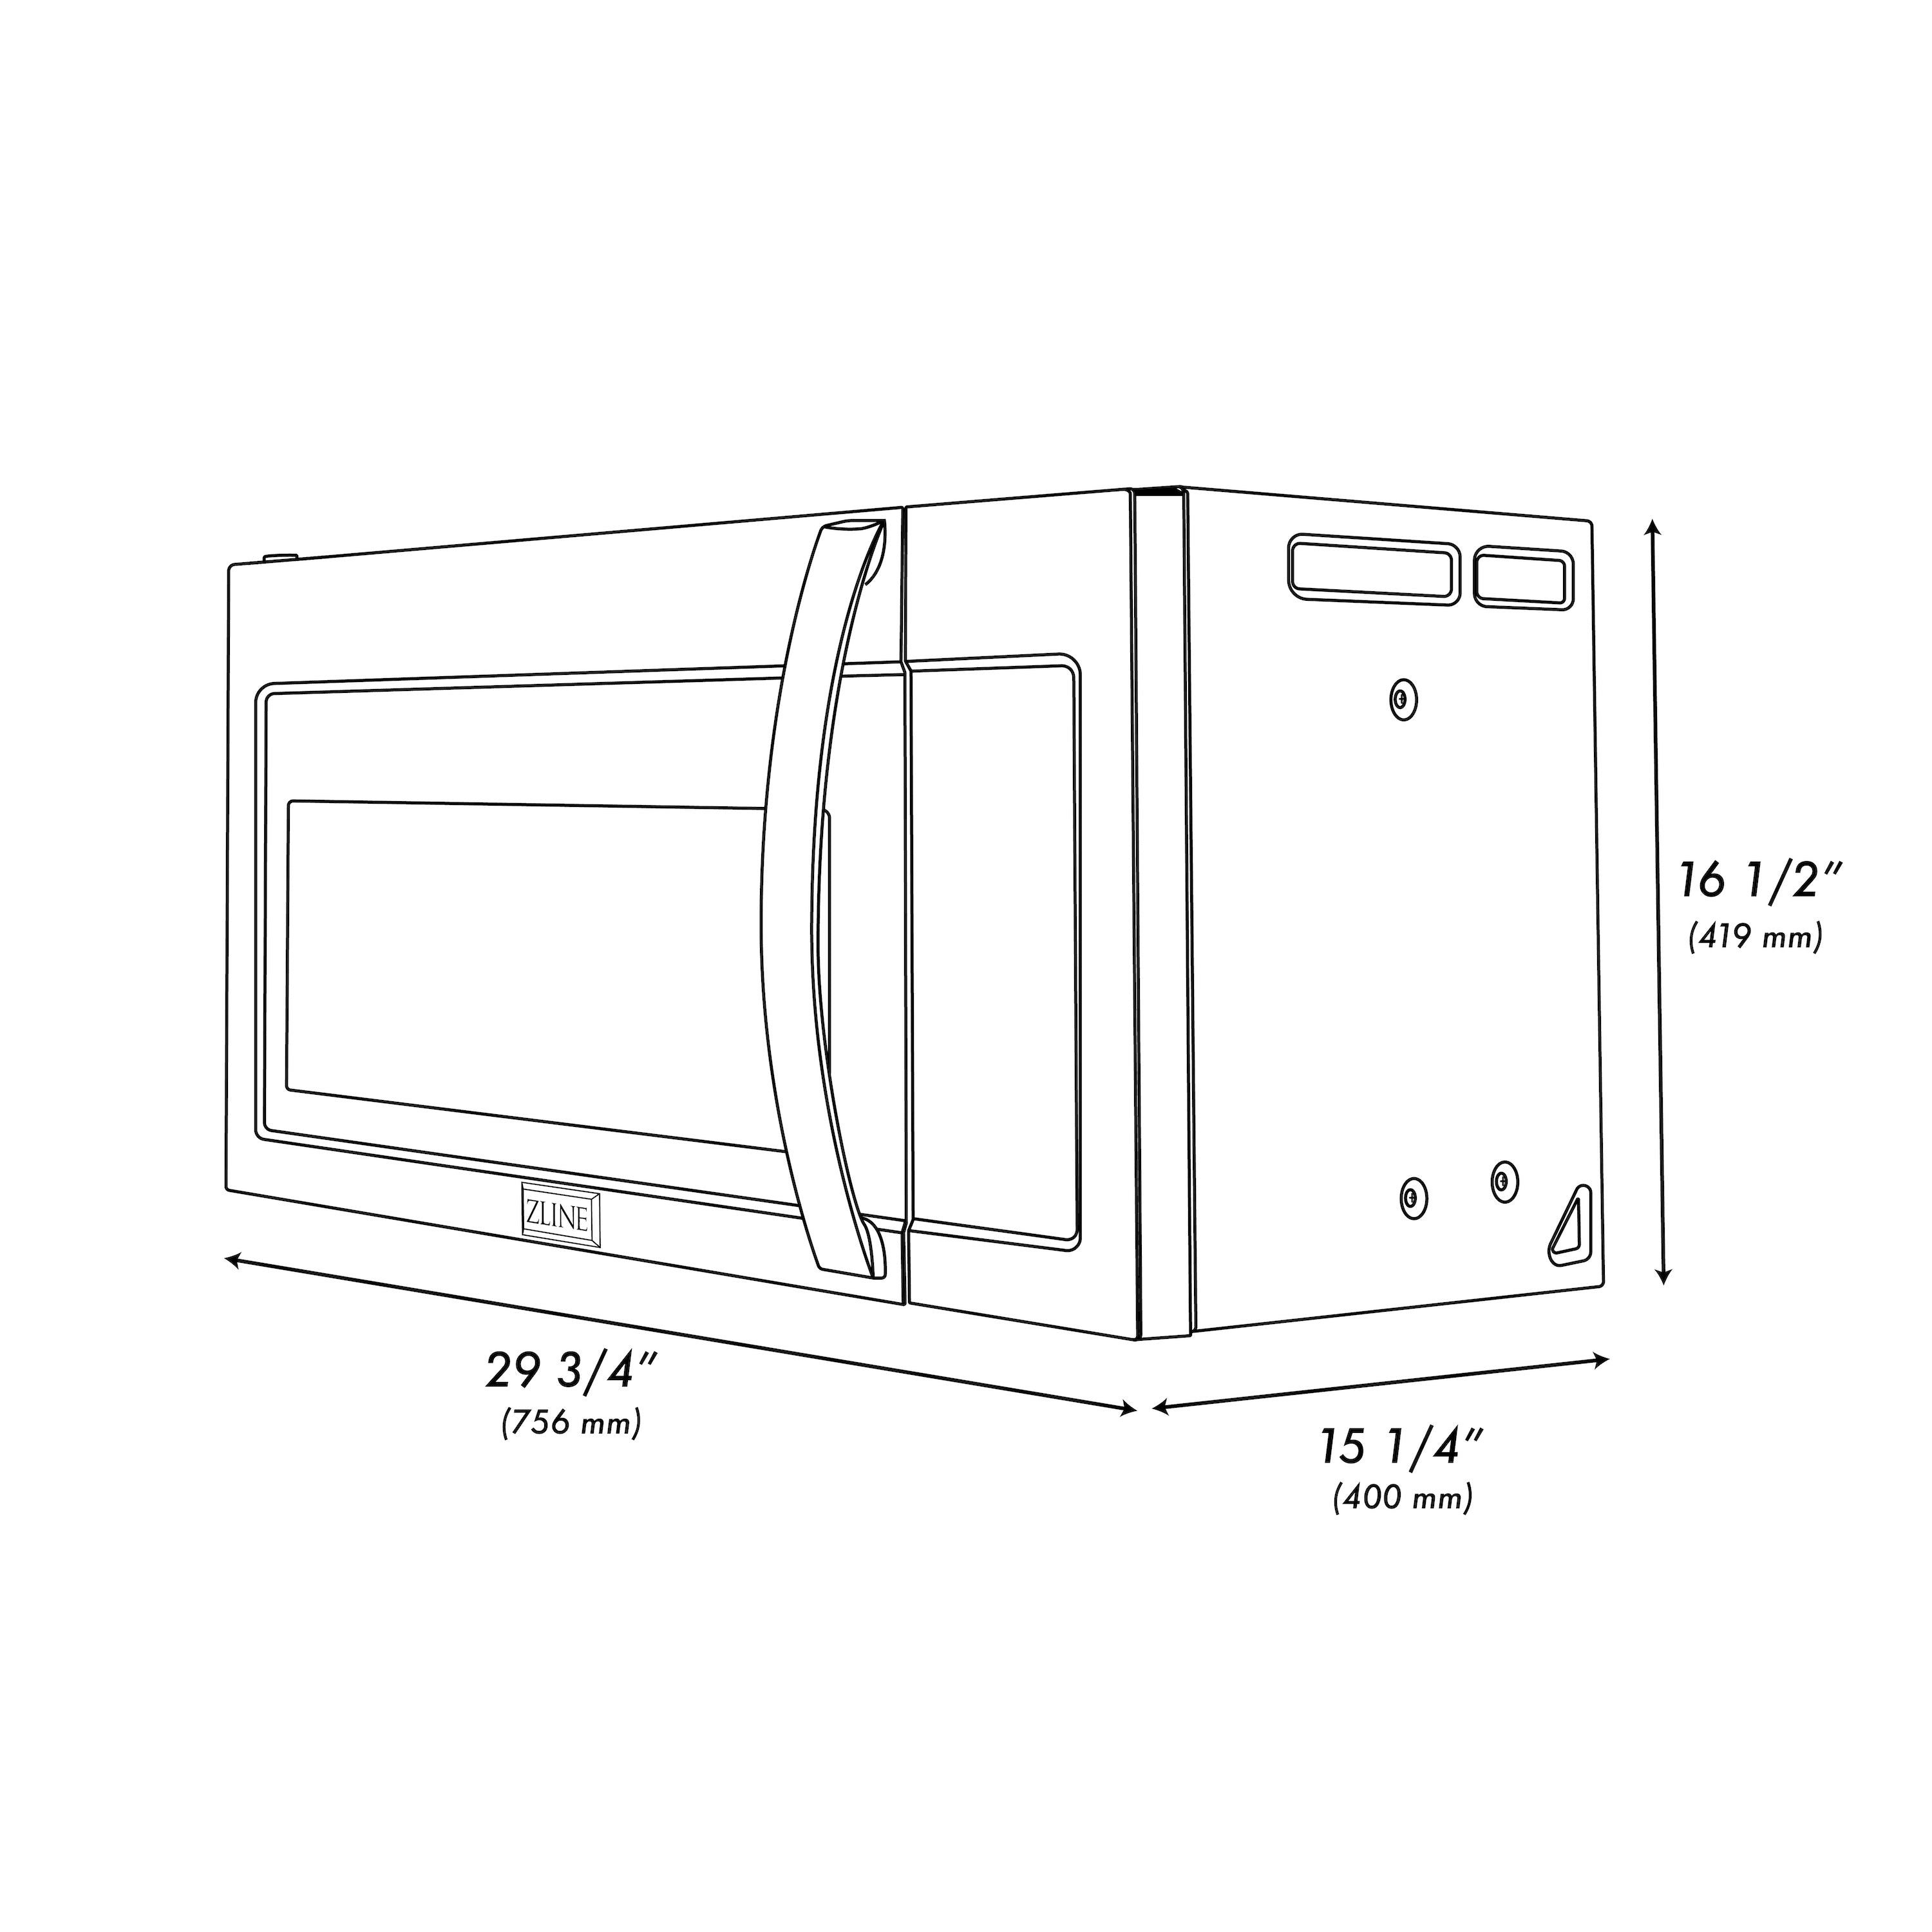 ZLINE 30" Over-the-Range Microwave Oven dimensional diagram.